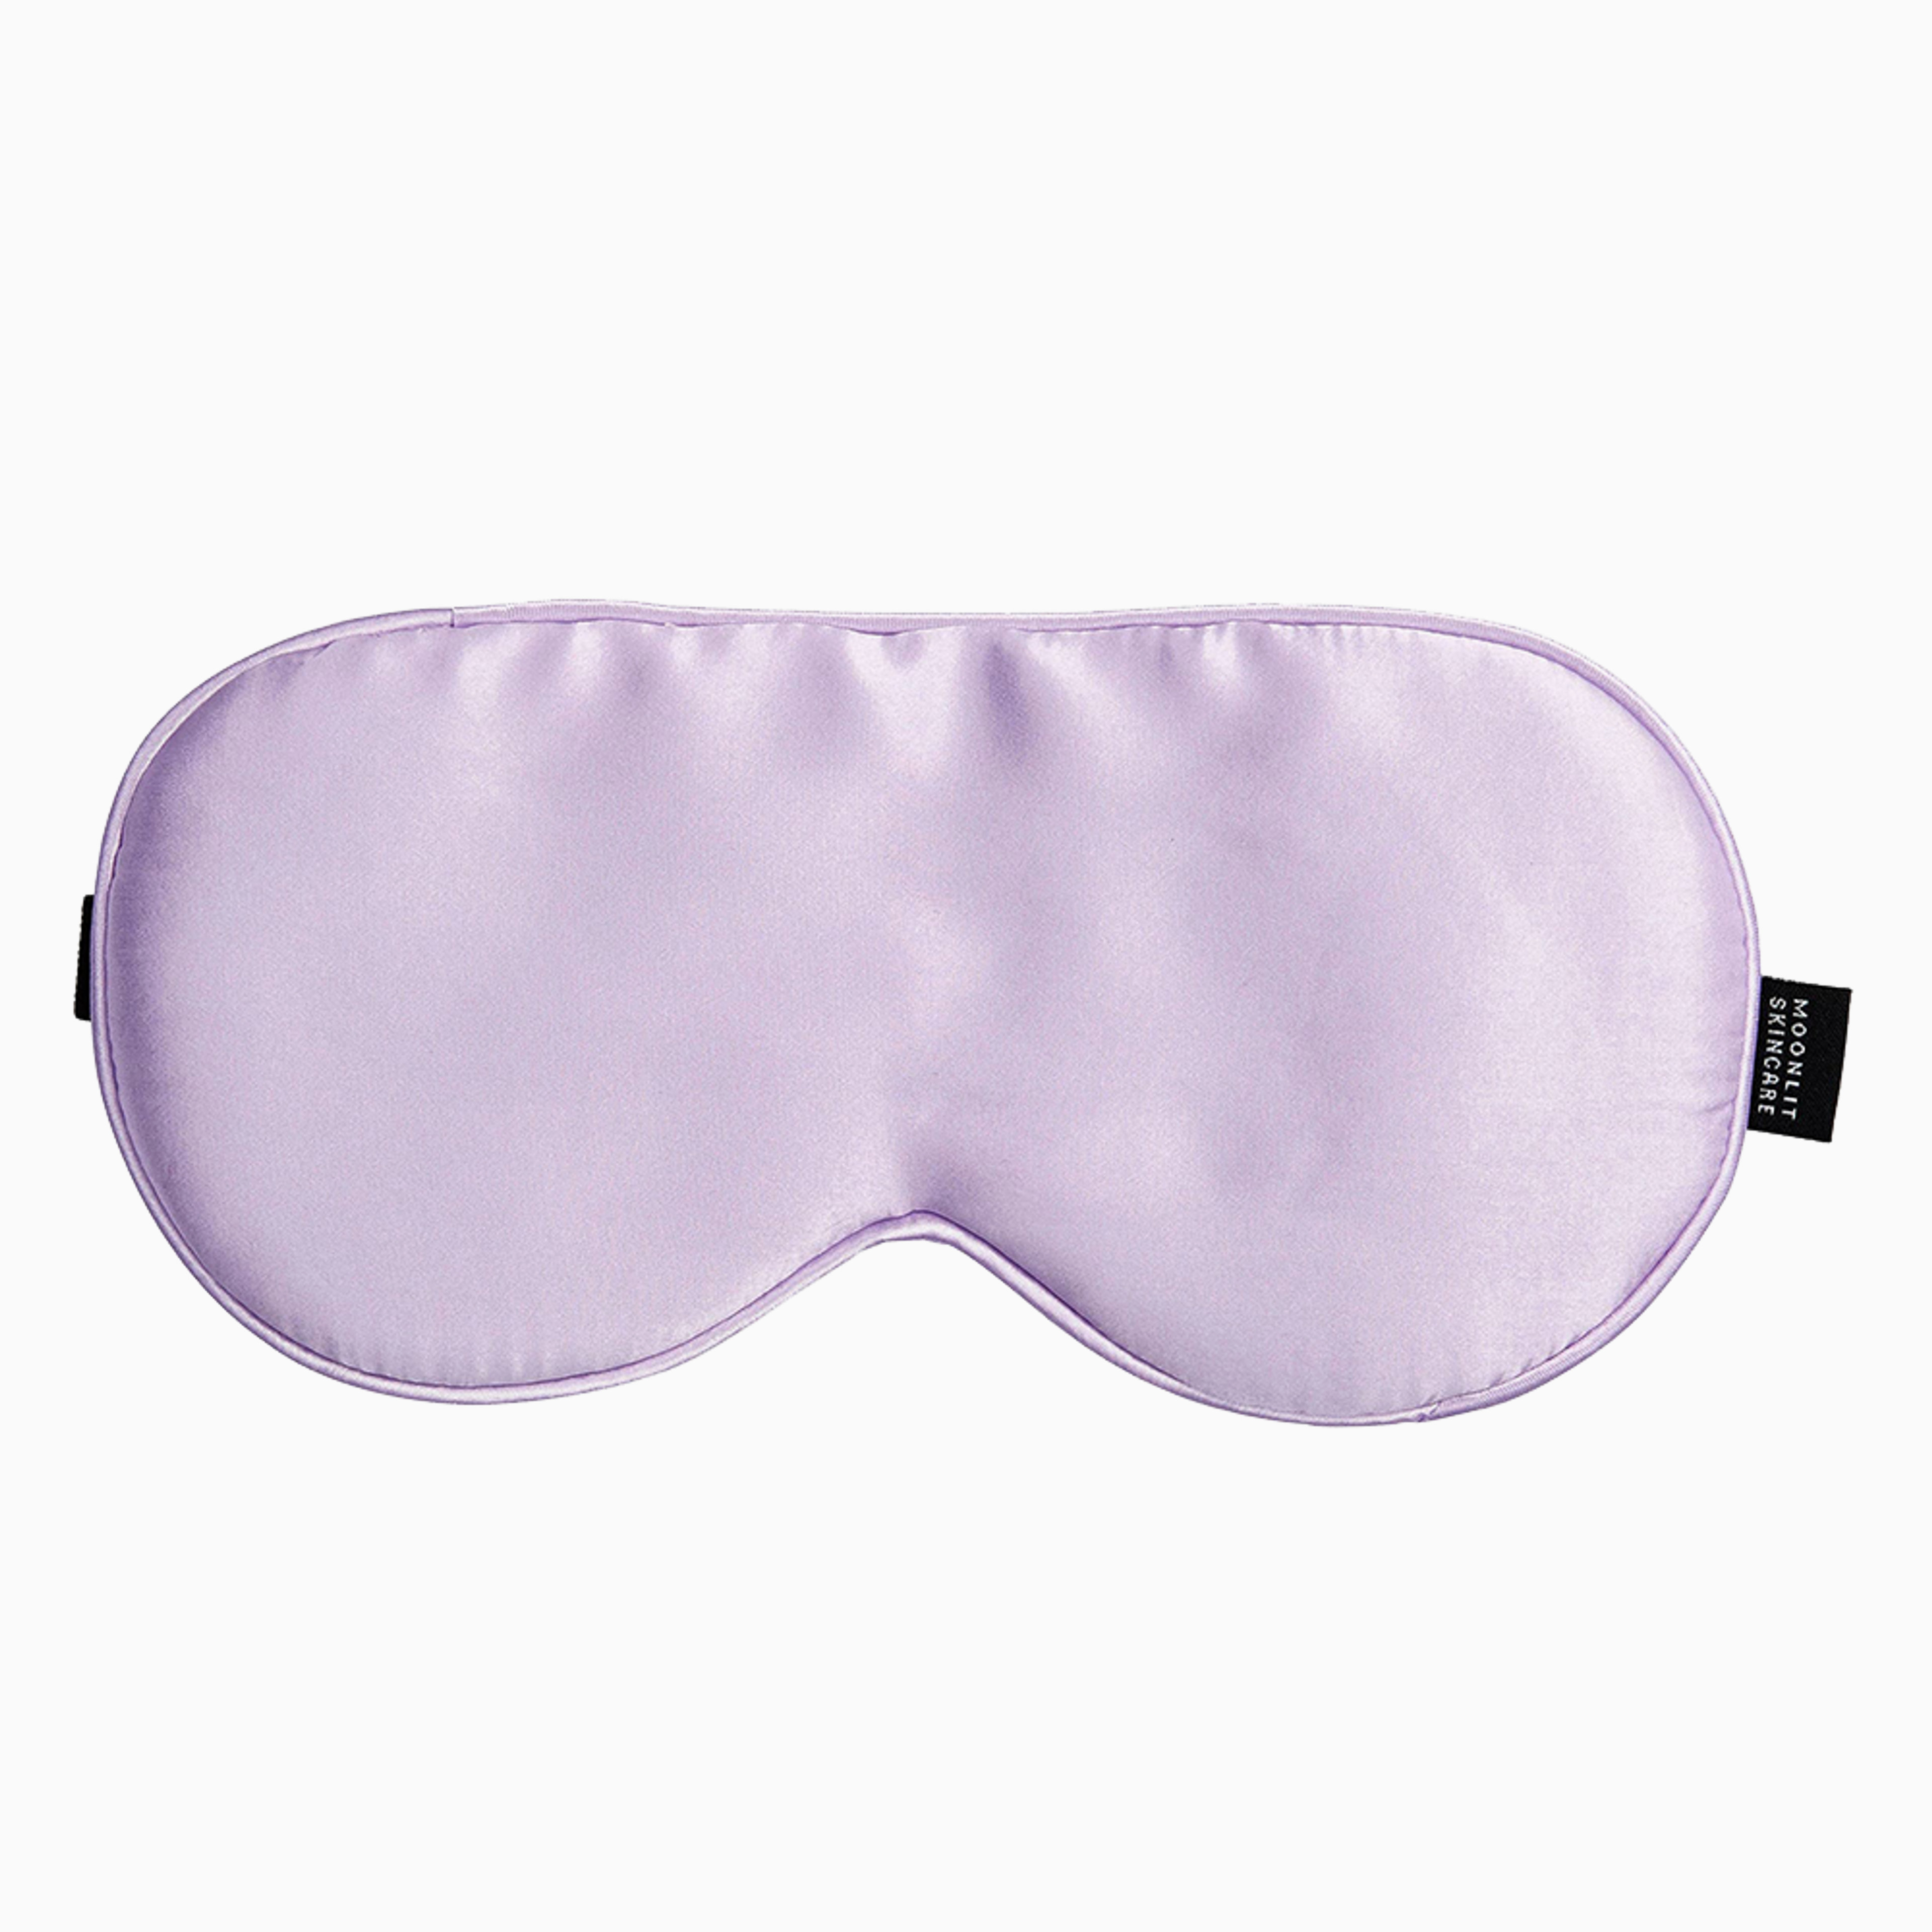 Lilac Purple Silk Sleeping Eyemask